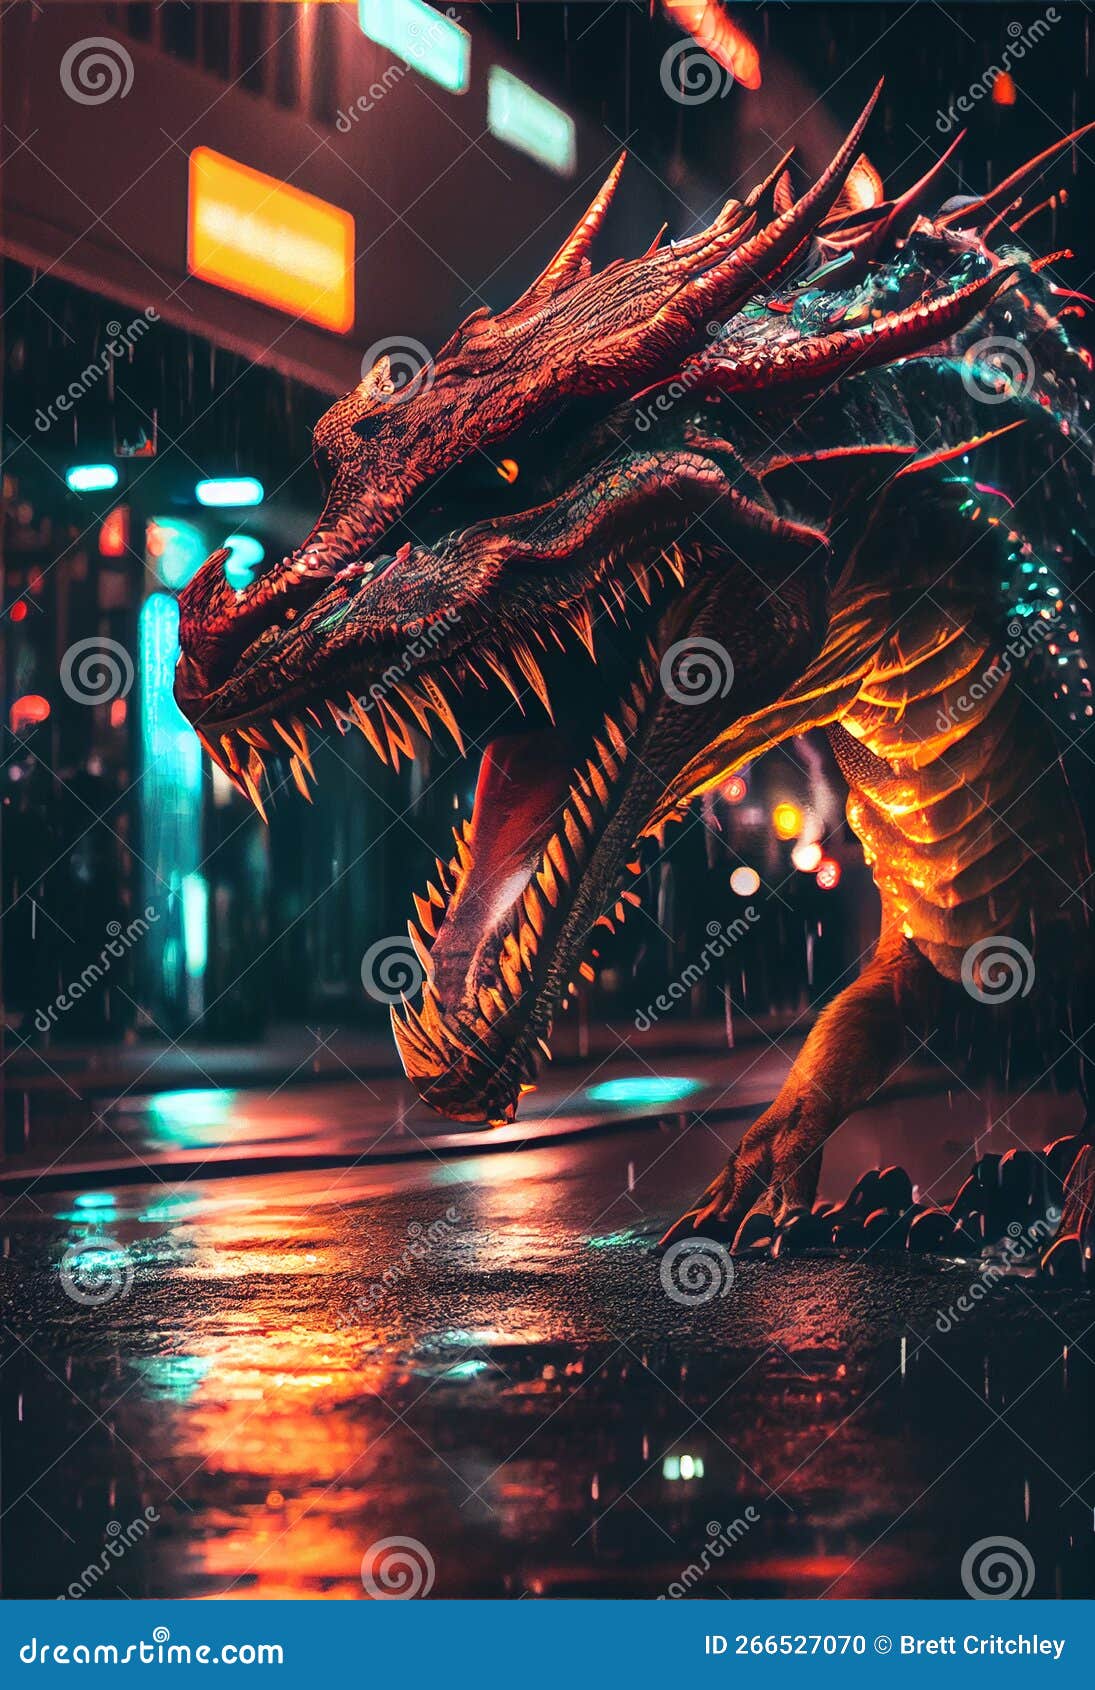 fierce dragon roaring in a city at night